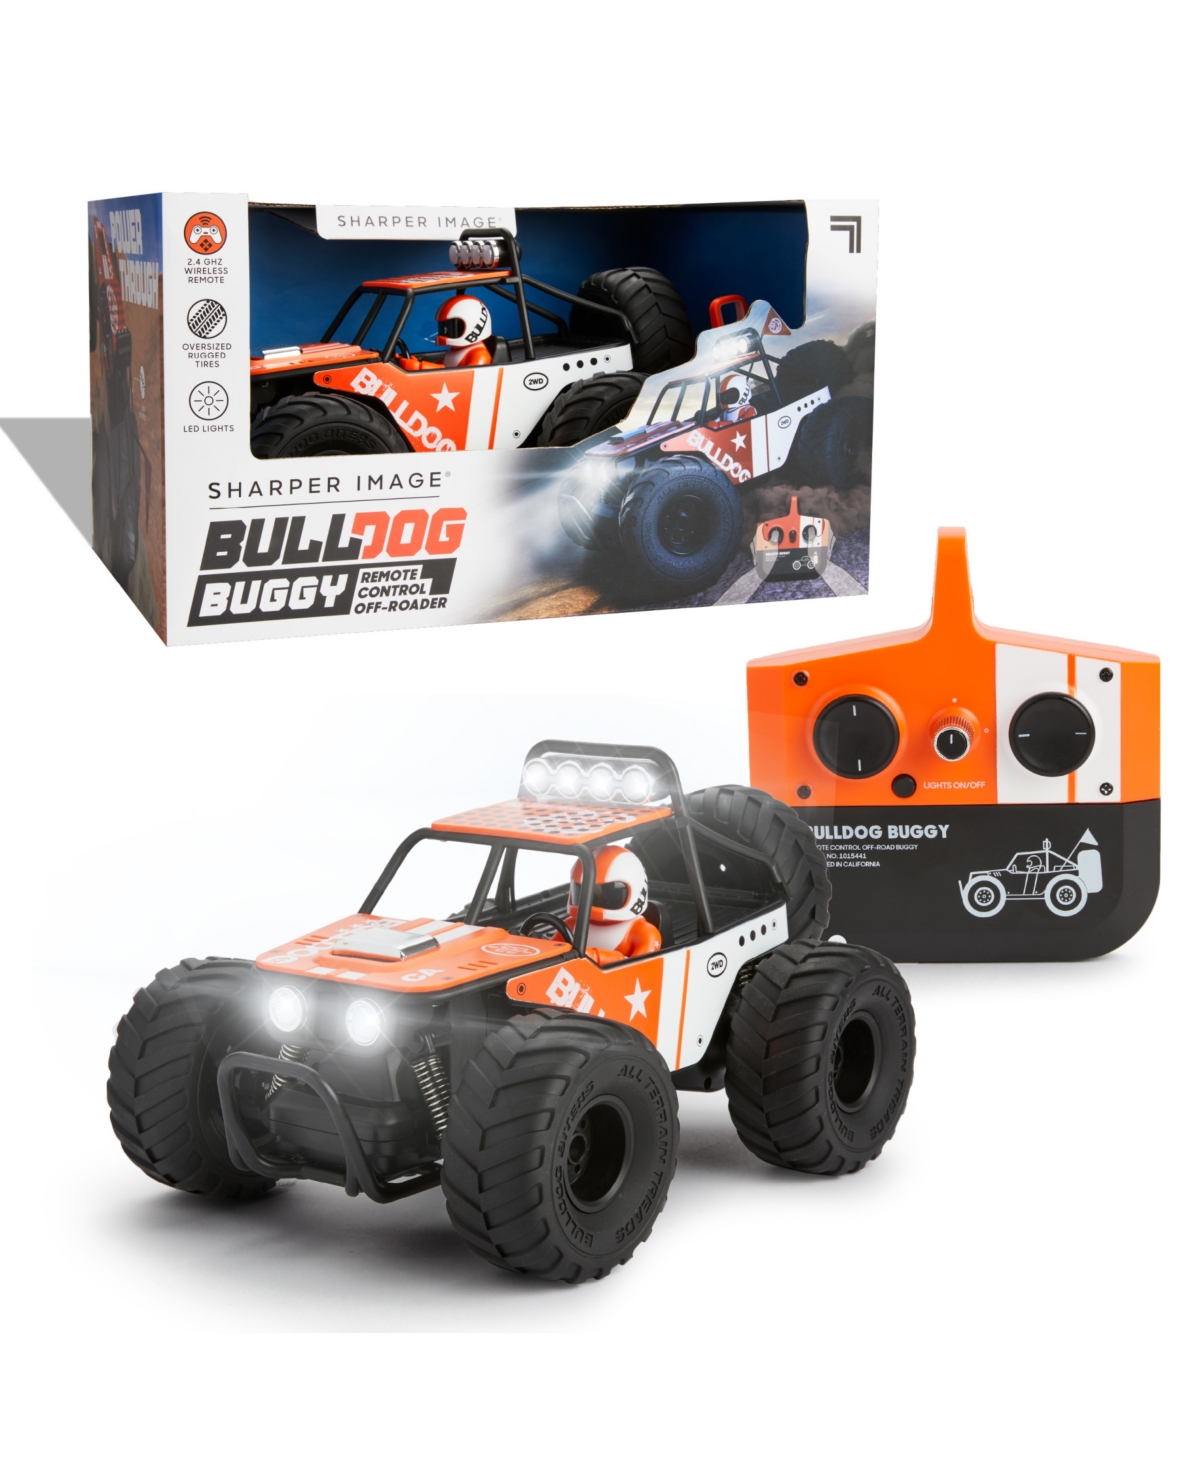 Sharper Image Toy Remote Control Bulldog Duggy Off Roader Set, 5 Piece In Orange